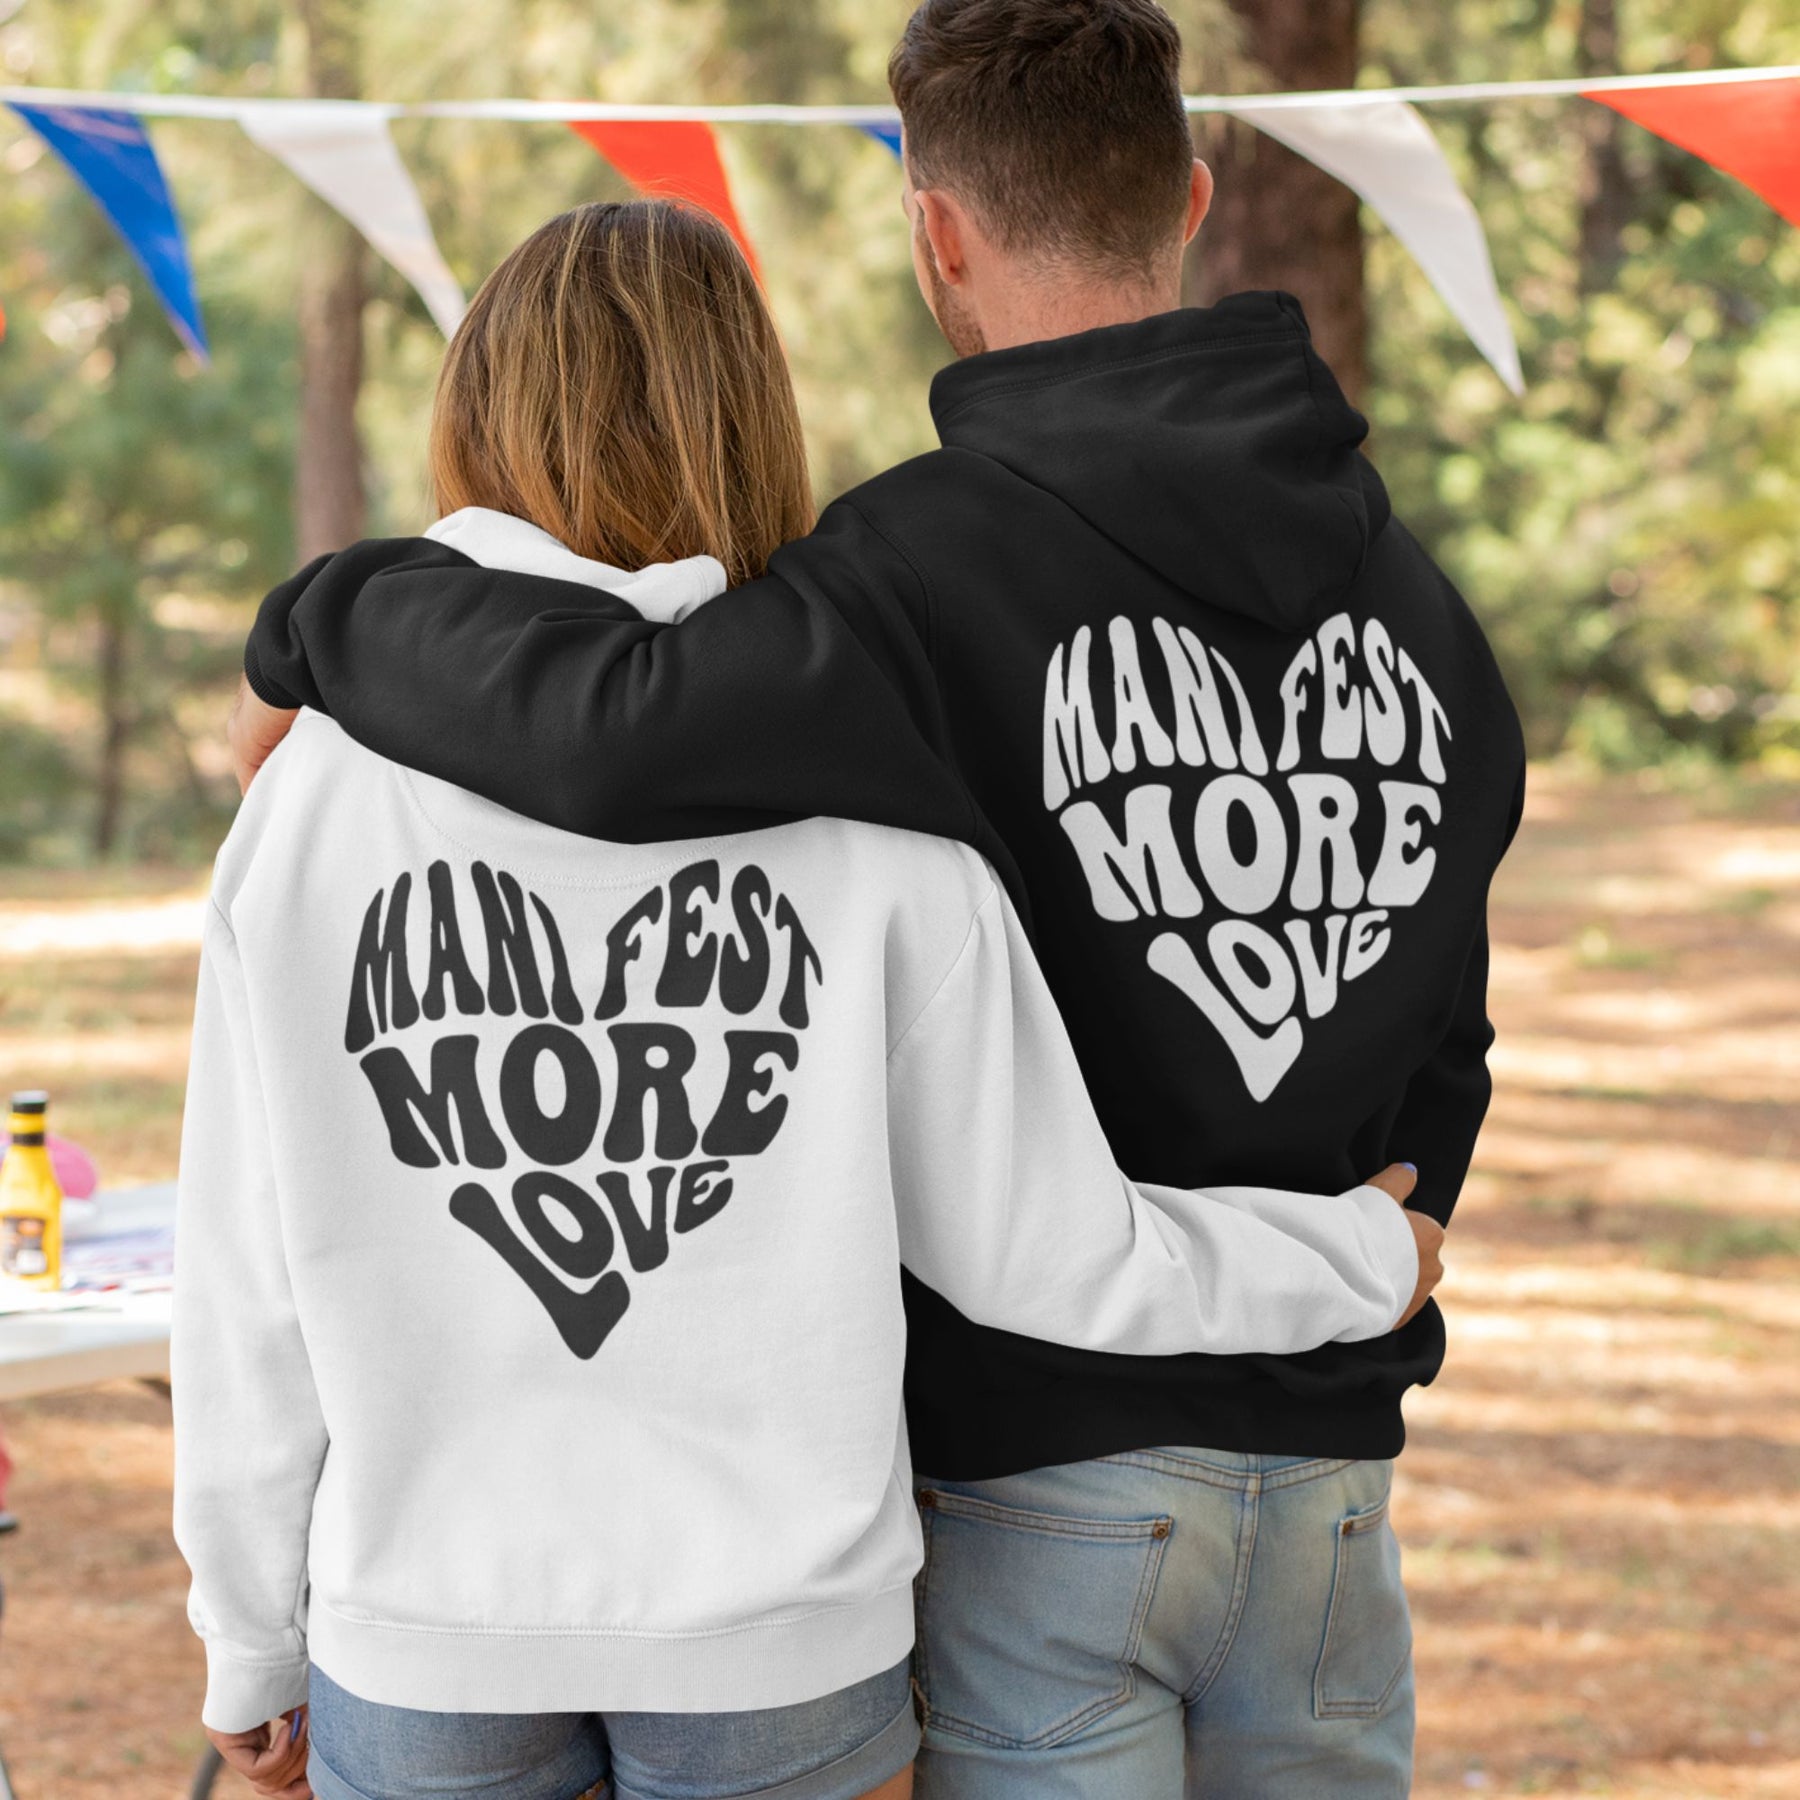 manifest-more-love-black-white-couple-hoodies-gogirgit-com